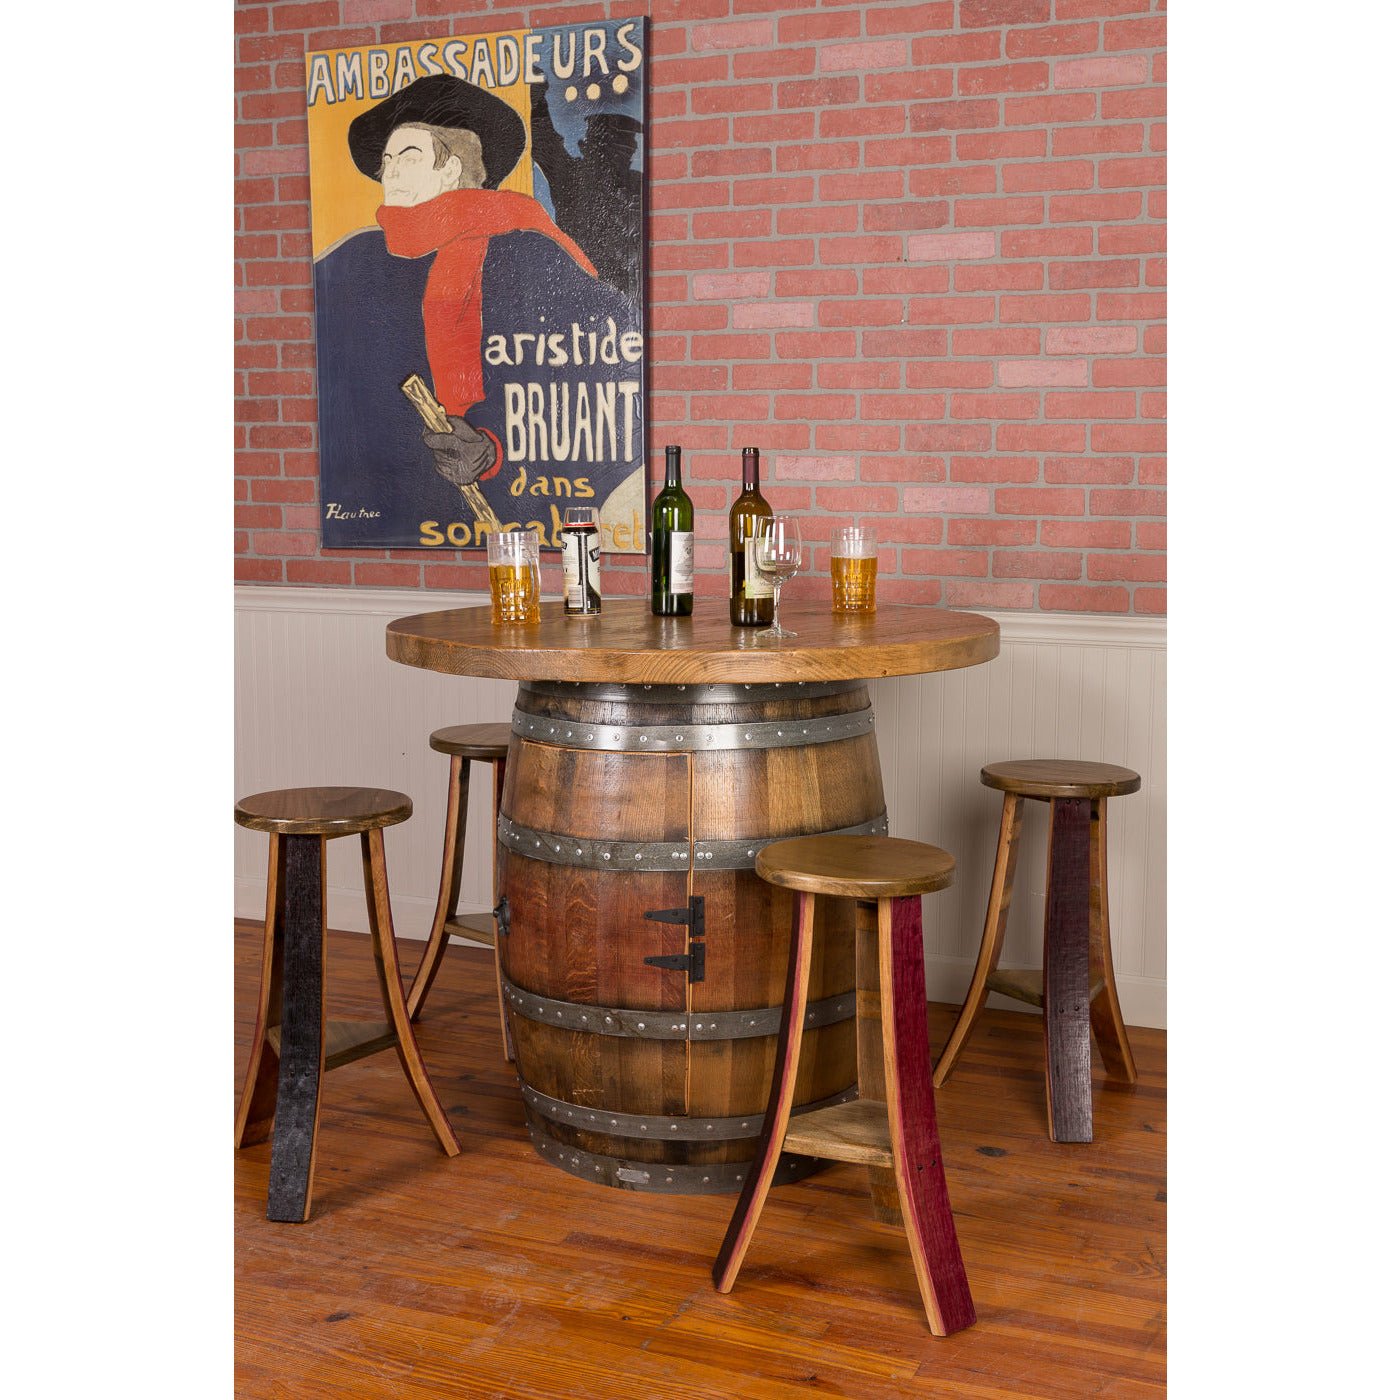 Napa East Wine Barrel Round Top Table Set: Cabinet Base - The Bar Design